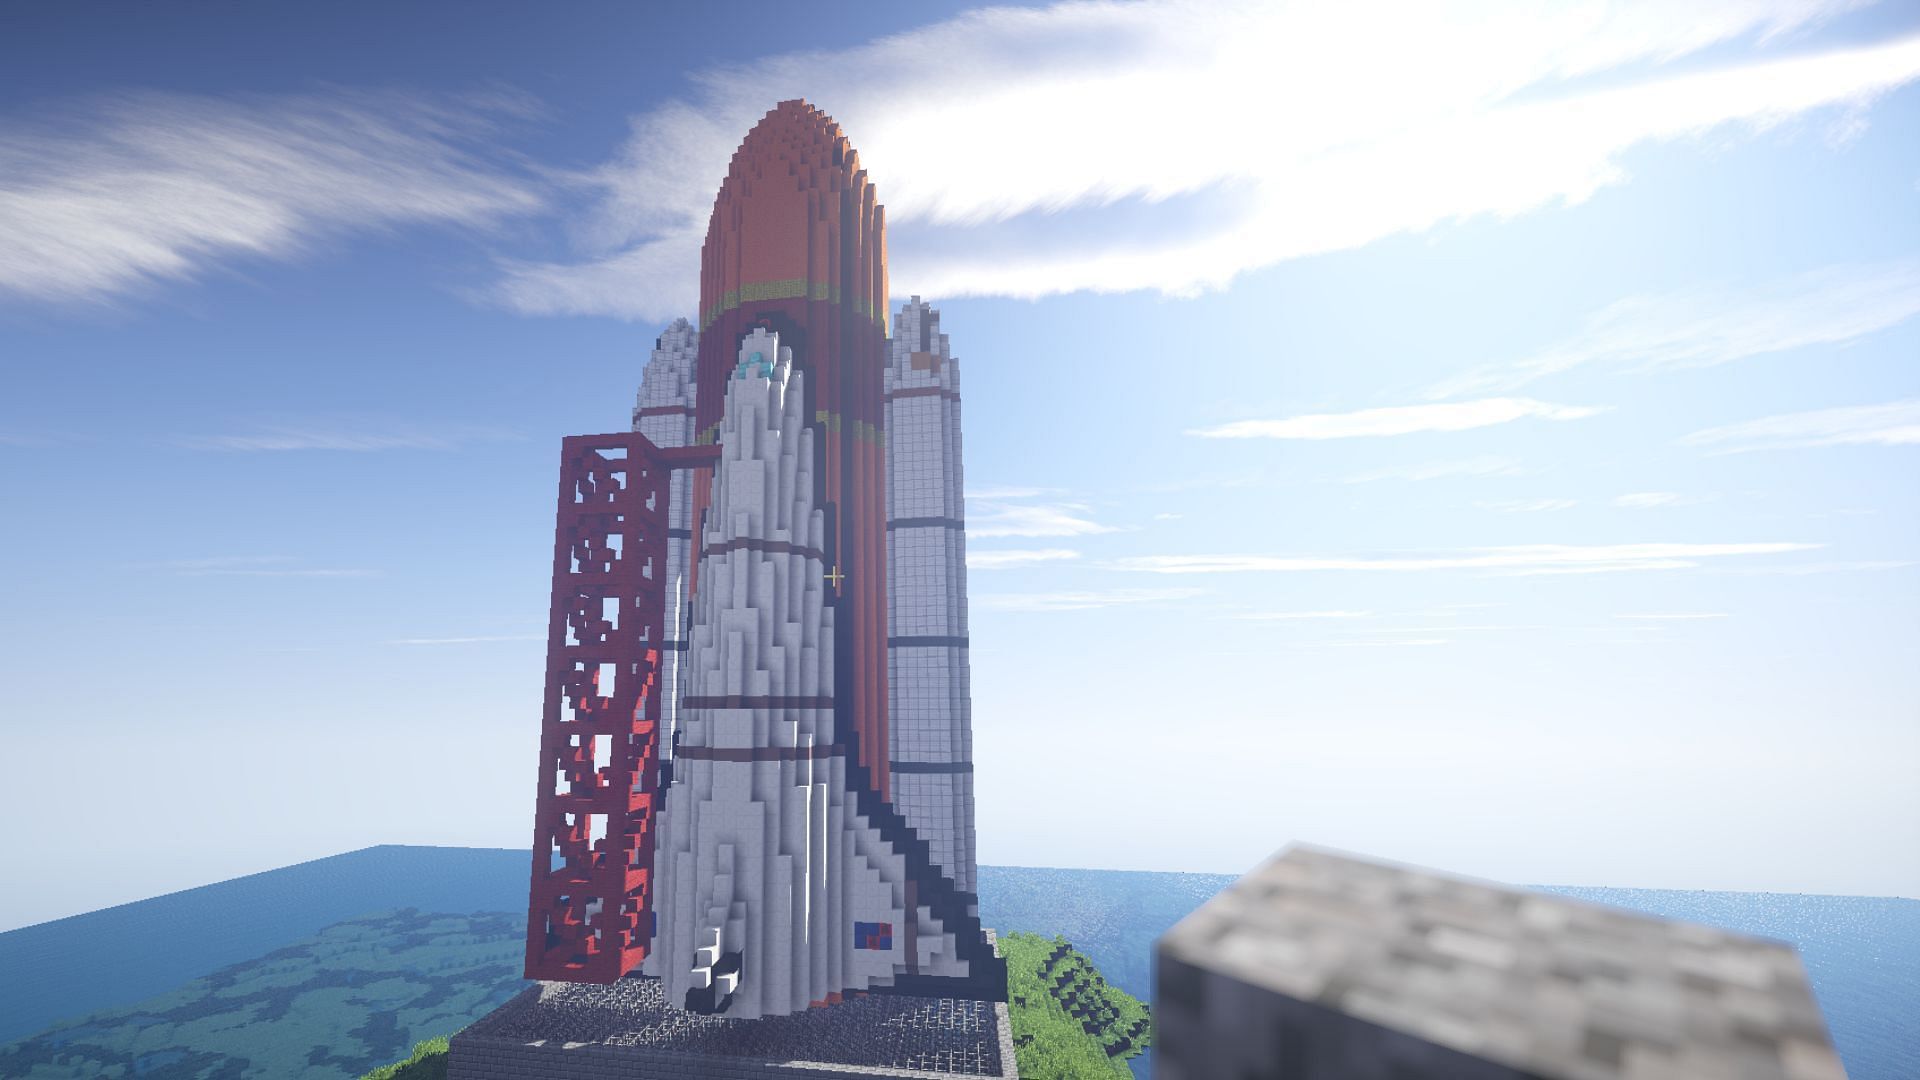 A rocket ship in Minecraft (Image via Reddit)